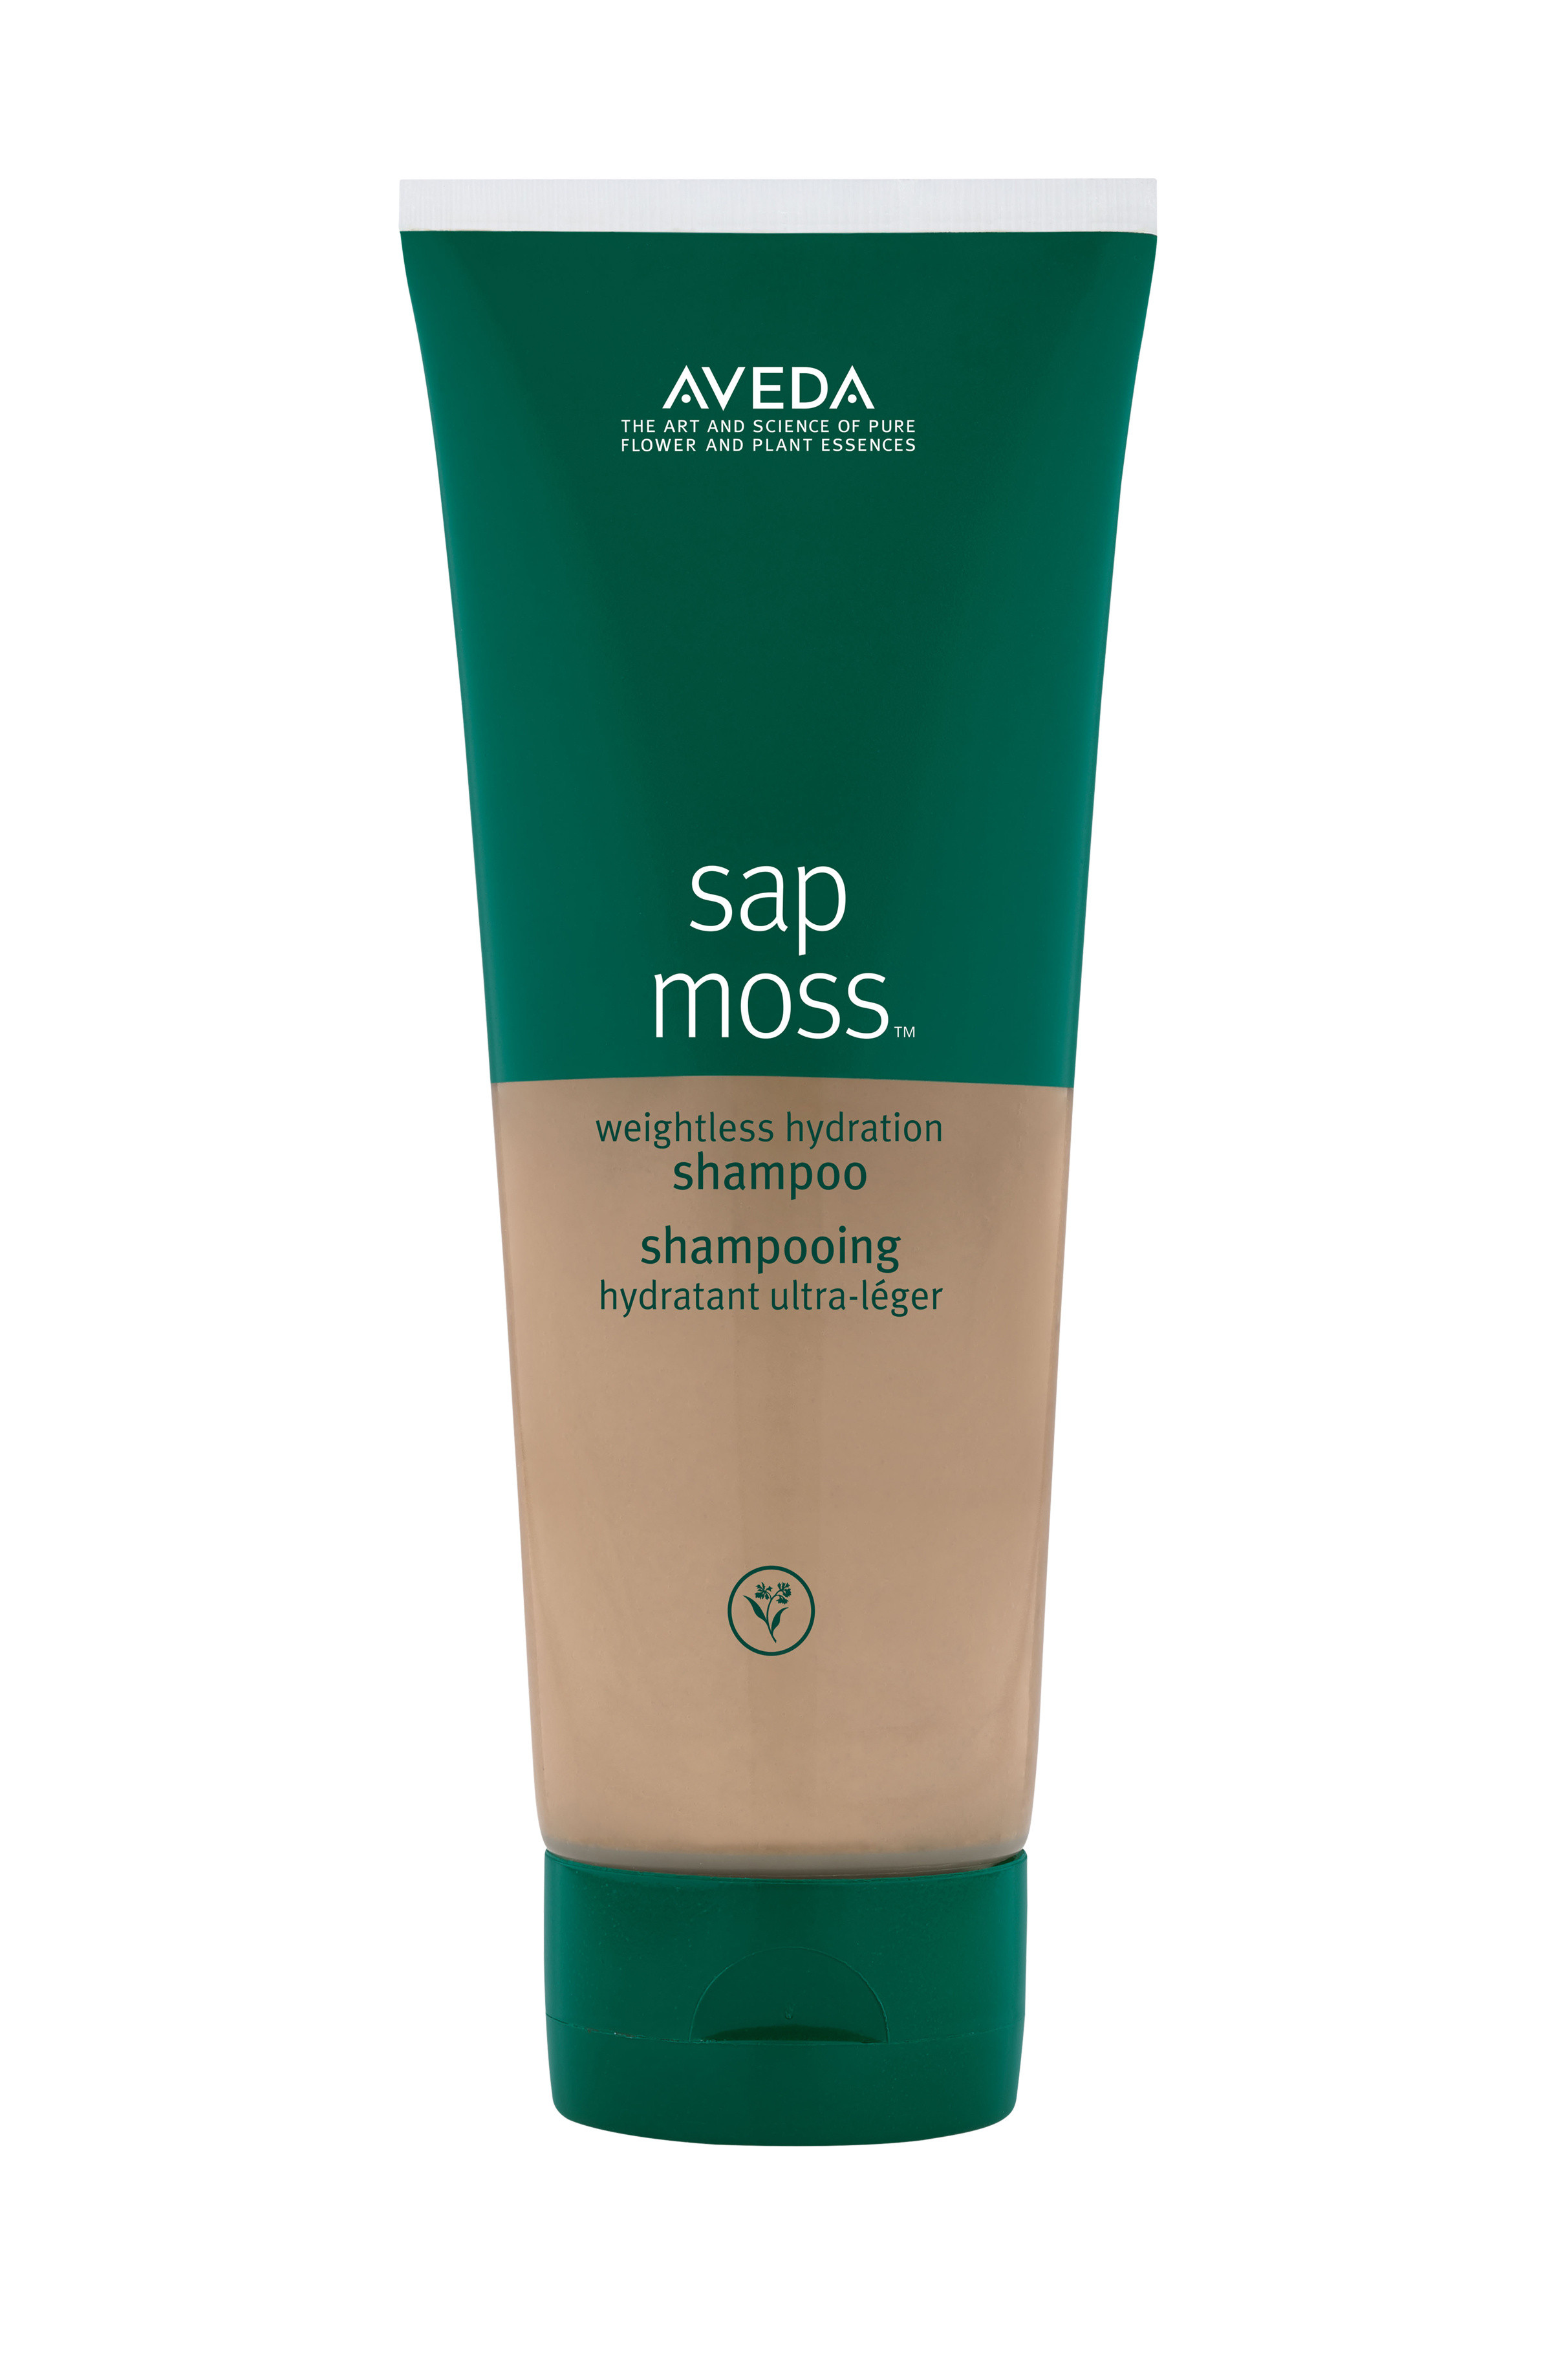 Aveda sap moss weightless hydration shampoo 200 ml, Green, large image number 0